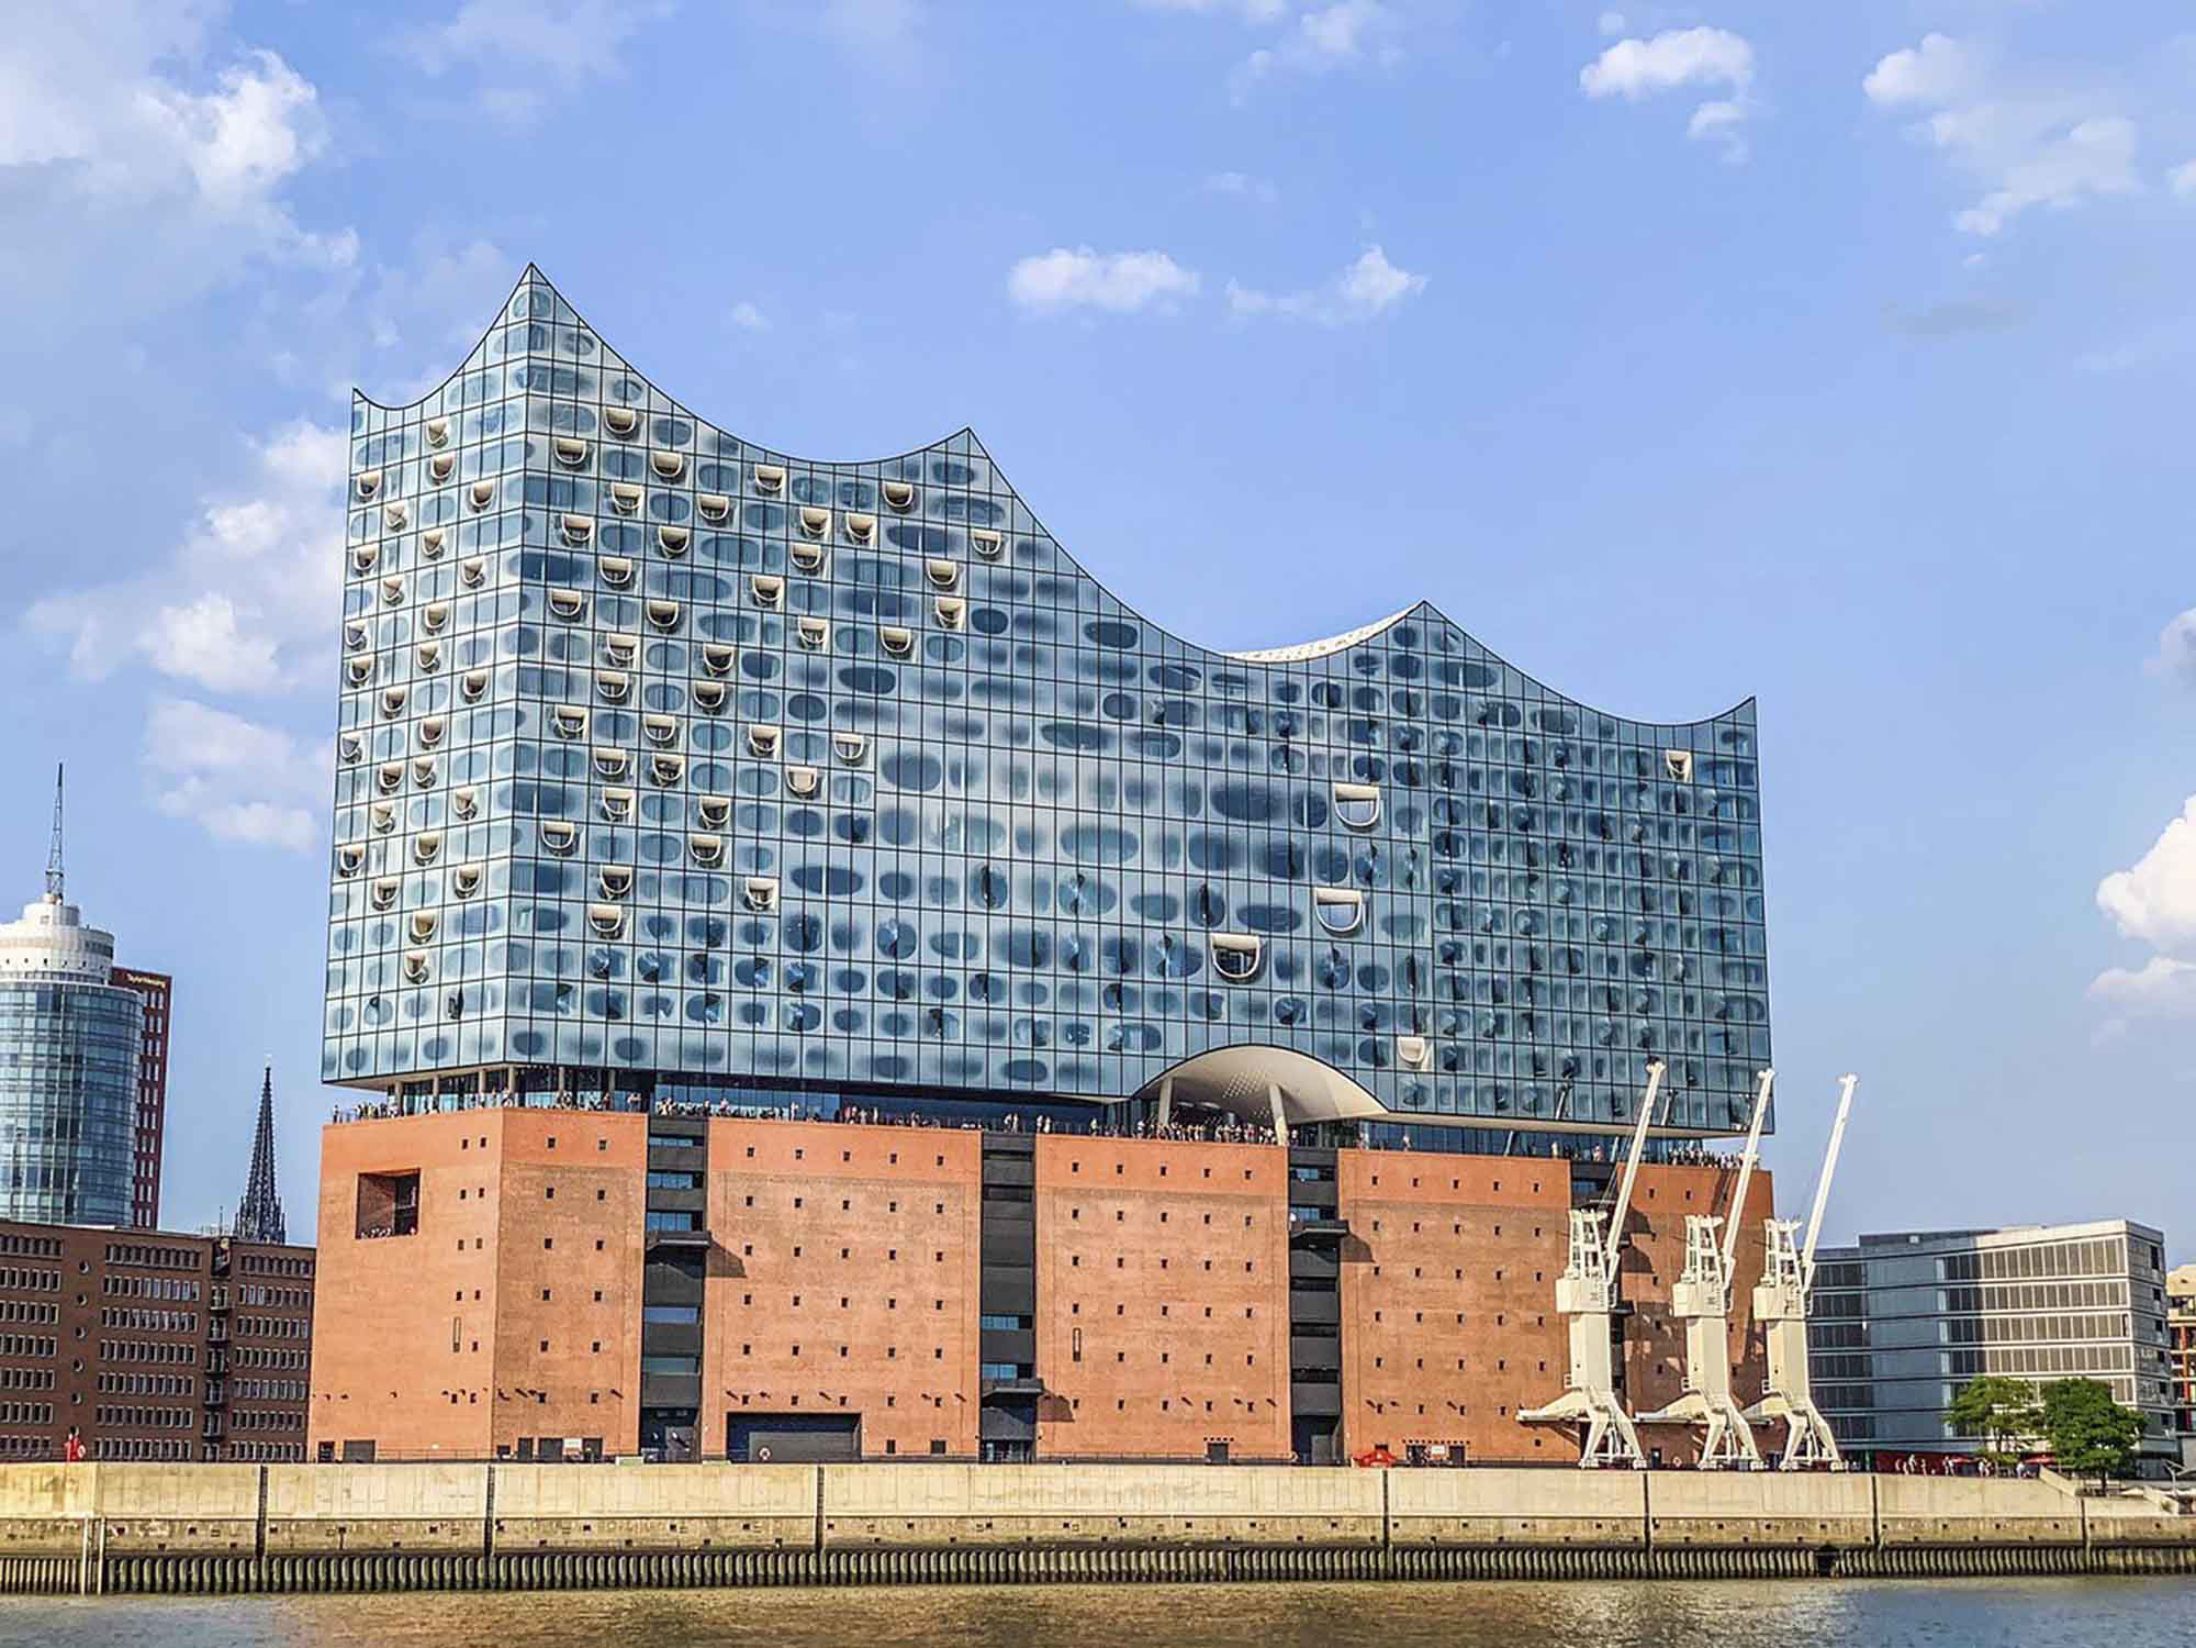 The Best Hamburg Attractions - Elbphilharmonie